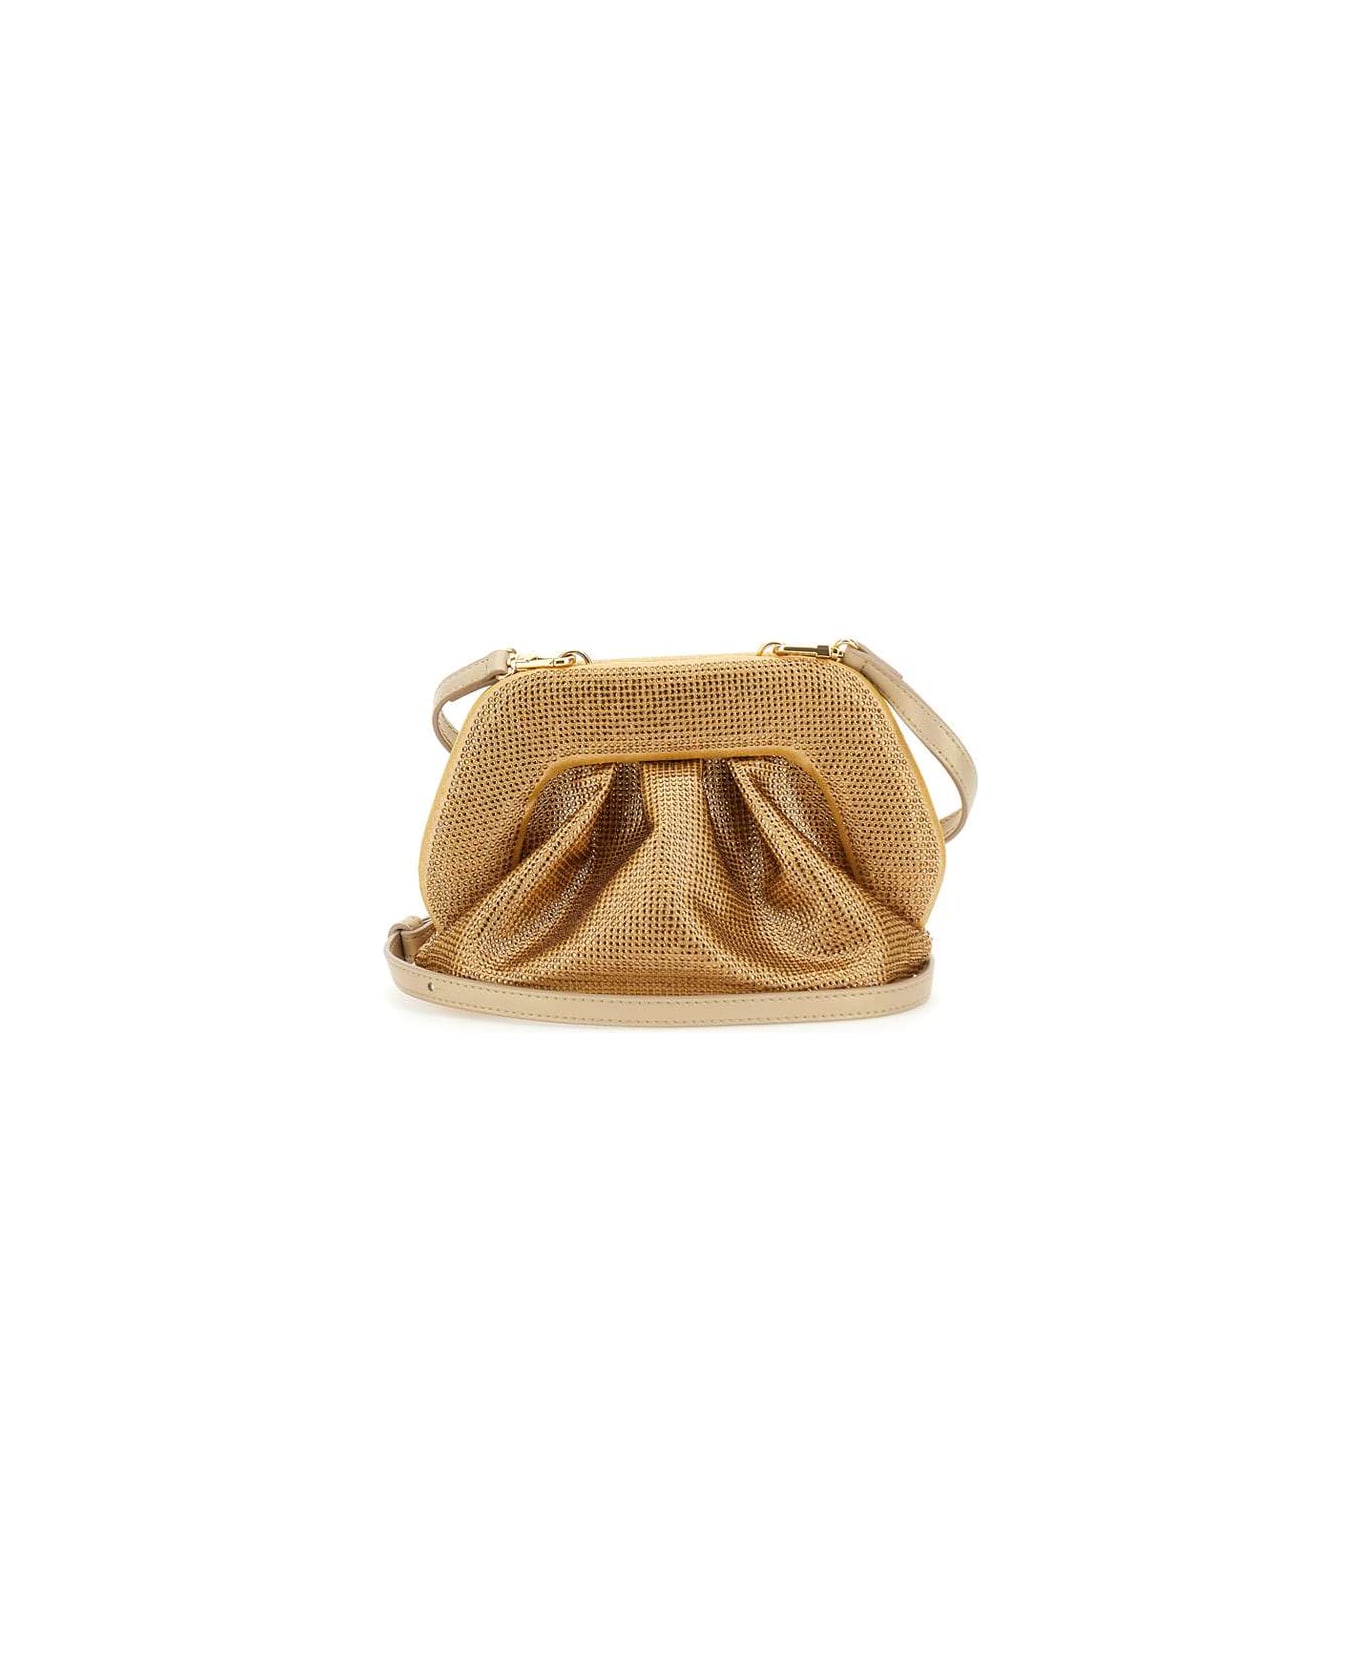 THEMOIRè "gea Strass" Vegan Leather Clutch Bag - GOLD トートバッグ